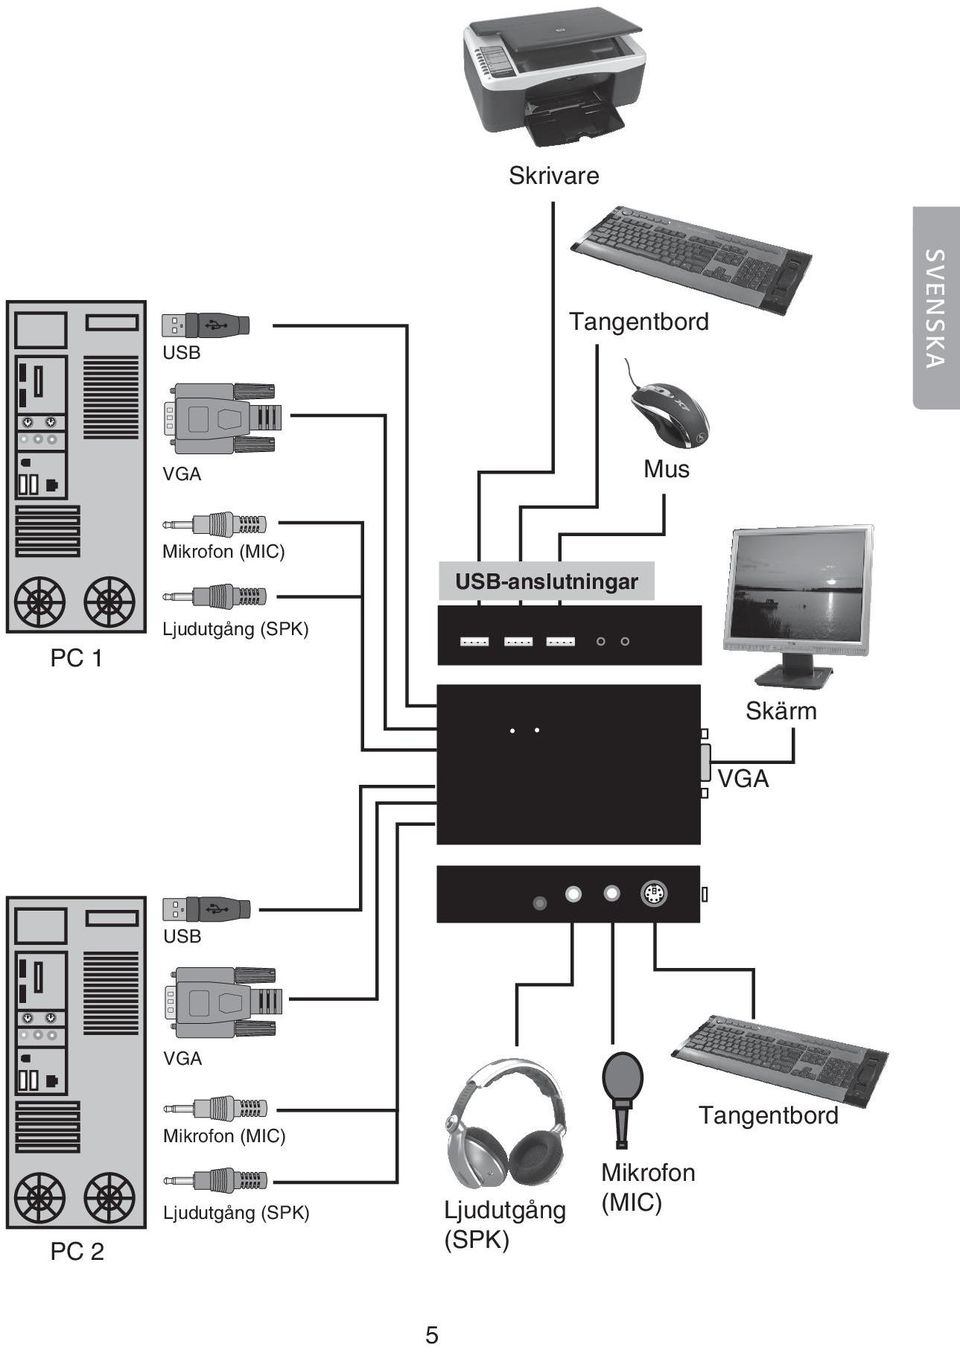 Skärm PC 2 Mikrofon (MIC) Ljudutgång (SPK)